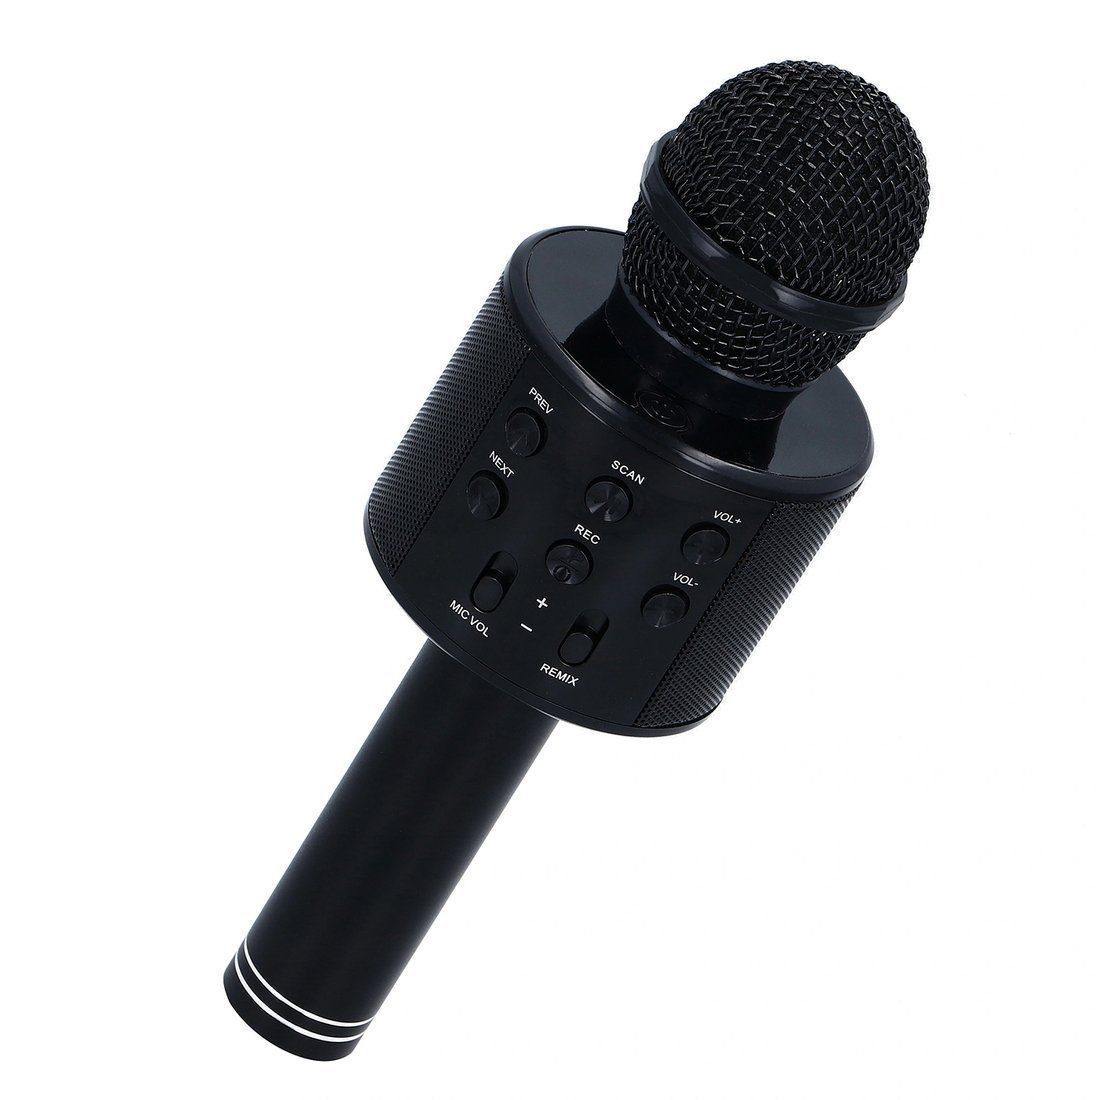 Mikrofon mit Stativ für Kinder Karaoke mit Bedienfeld MP3-Eingang ROSA BLAU 